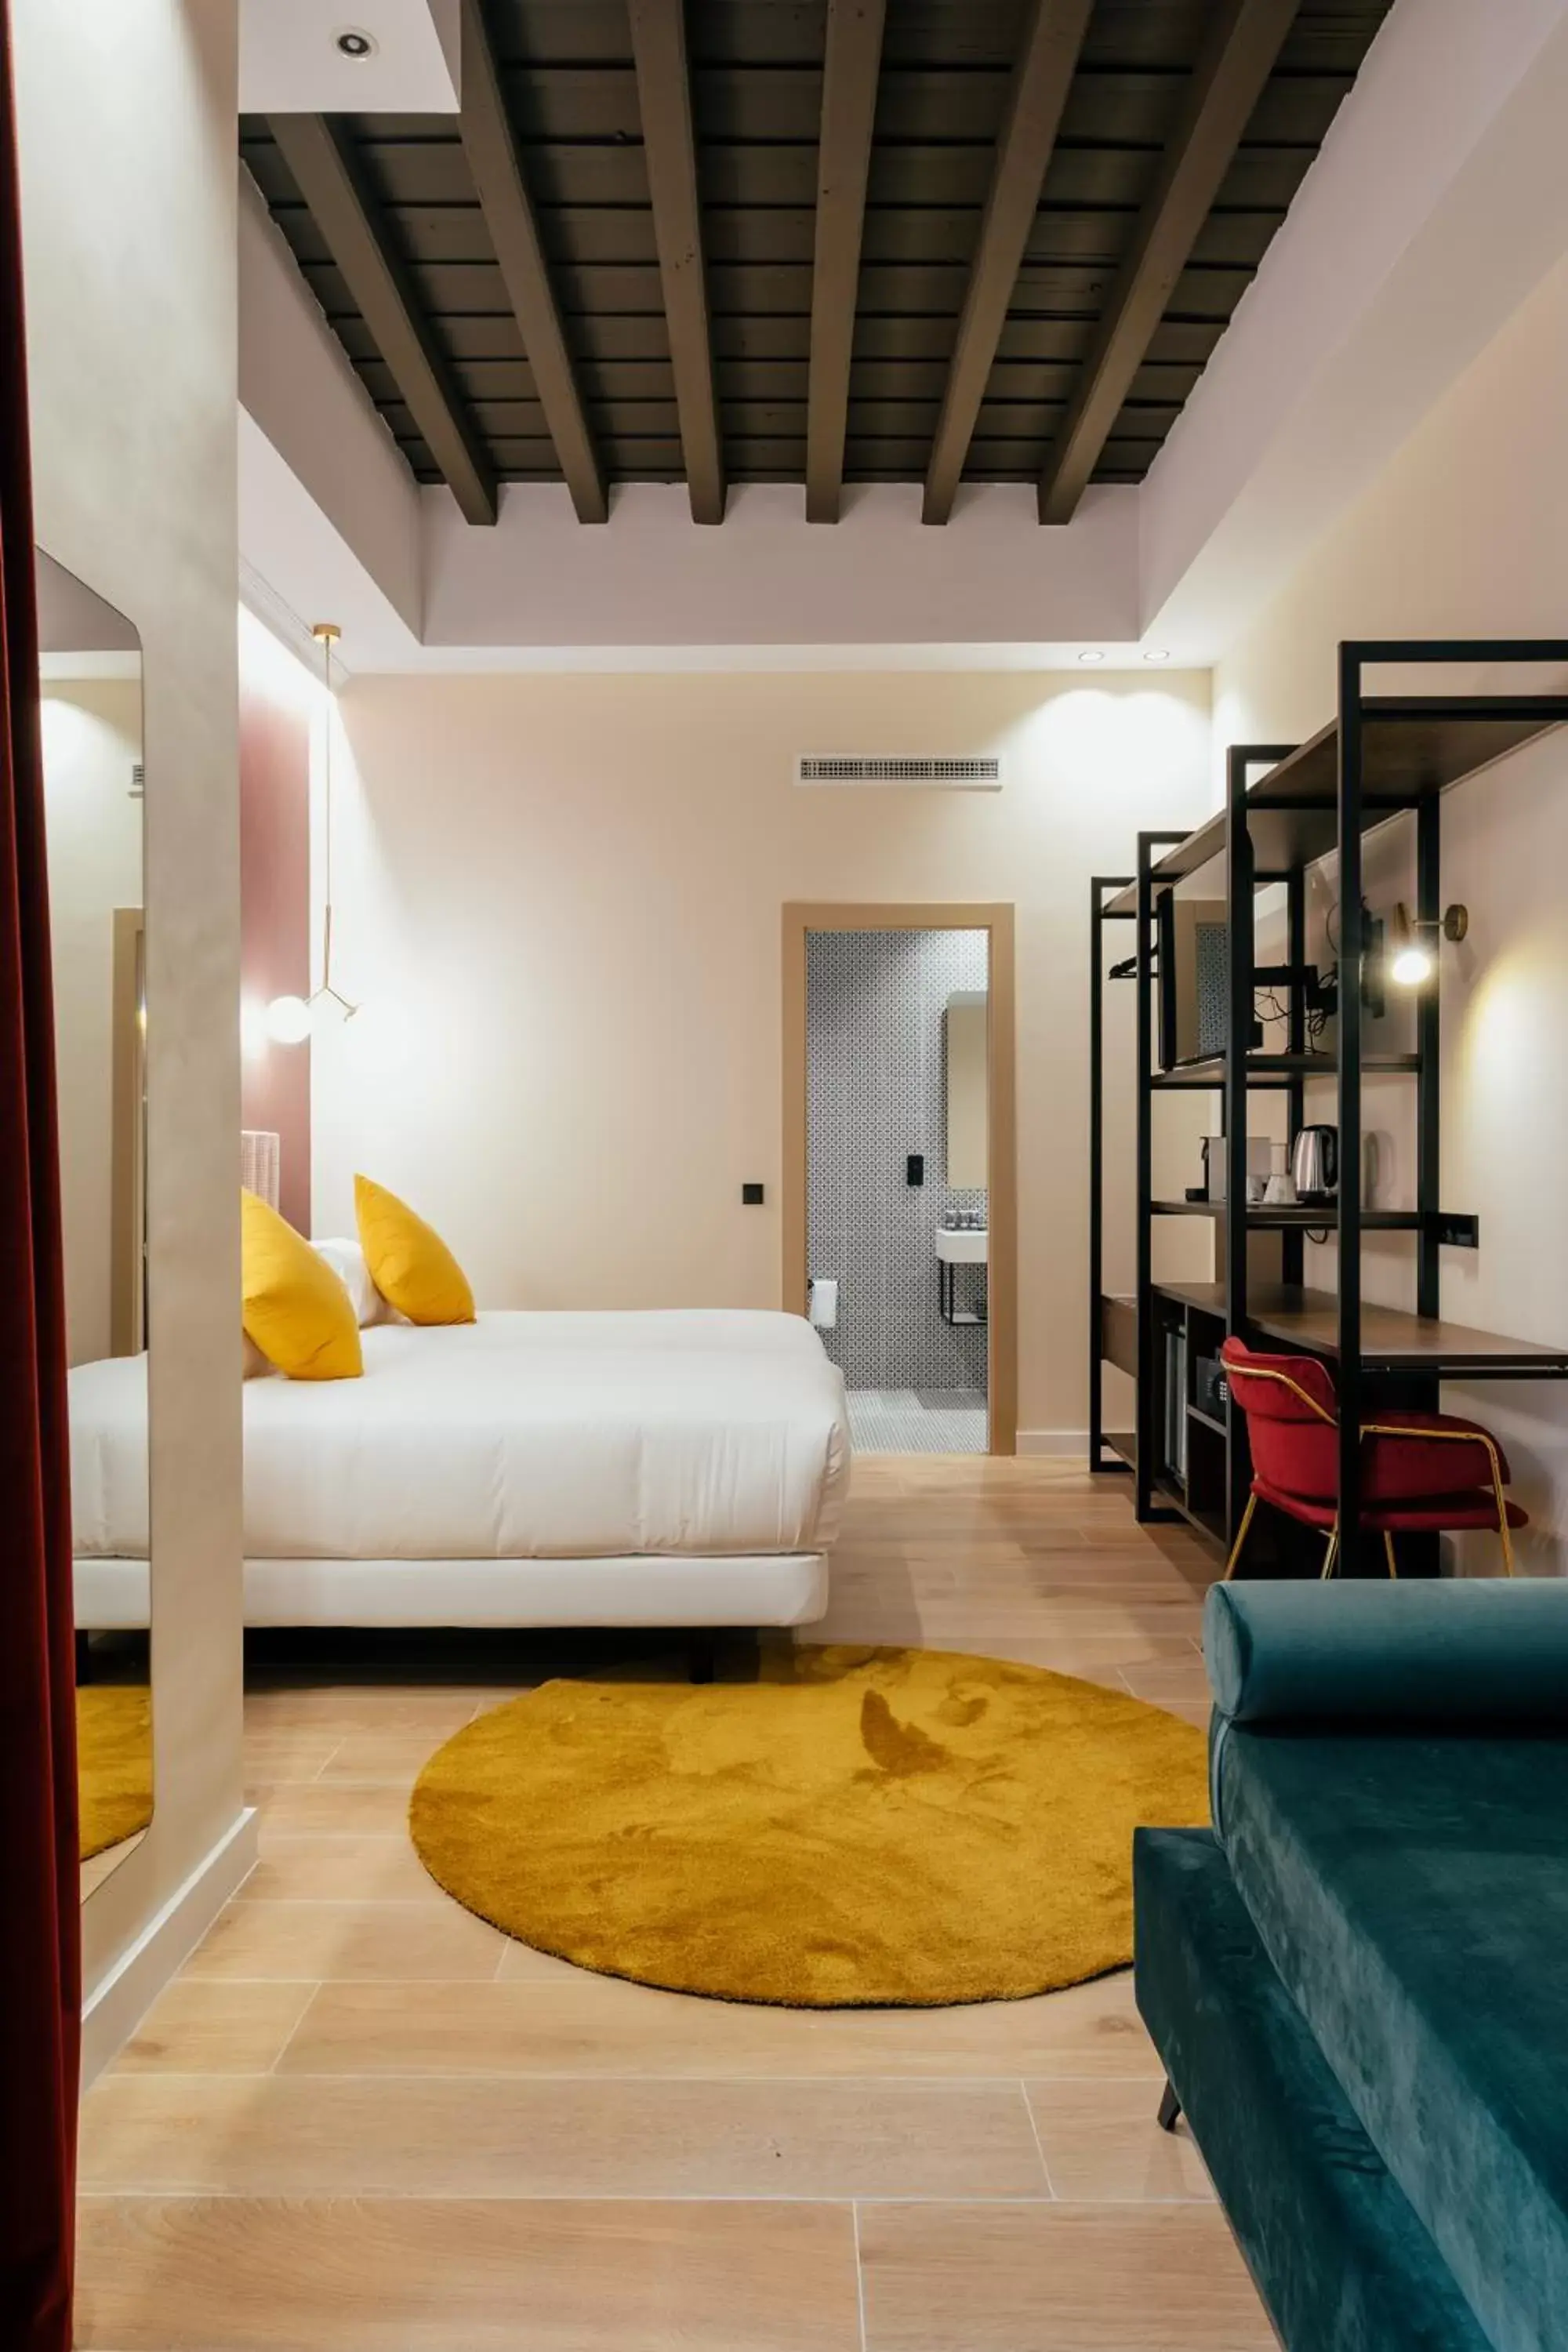 Photo of the whole room in Hotel Cetina Sevilla